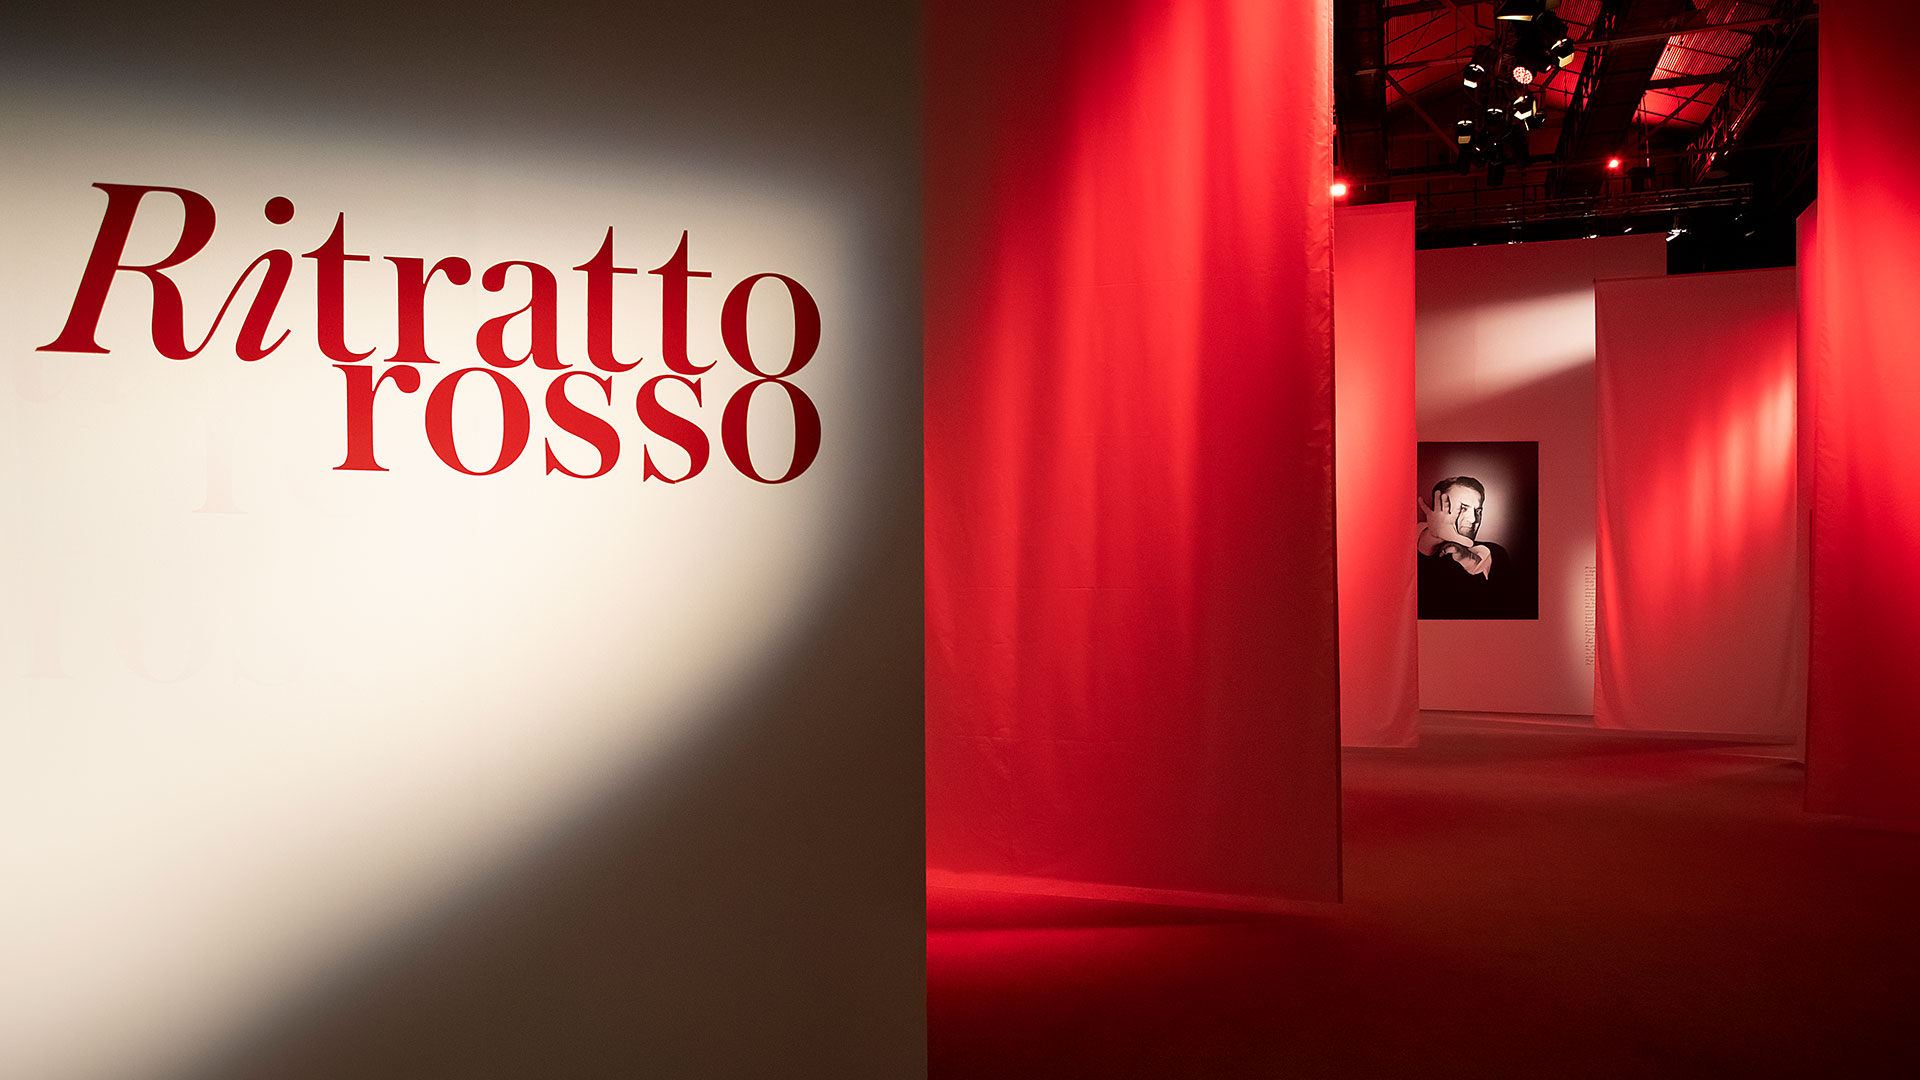 Ri-tratto Rosso: Celebrating 100 Years of Federico Fellini’s Legacy